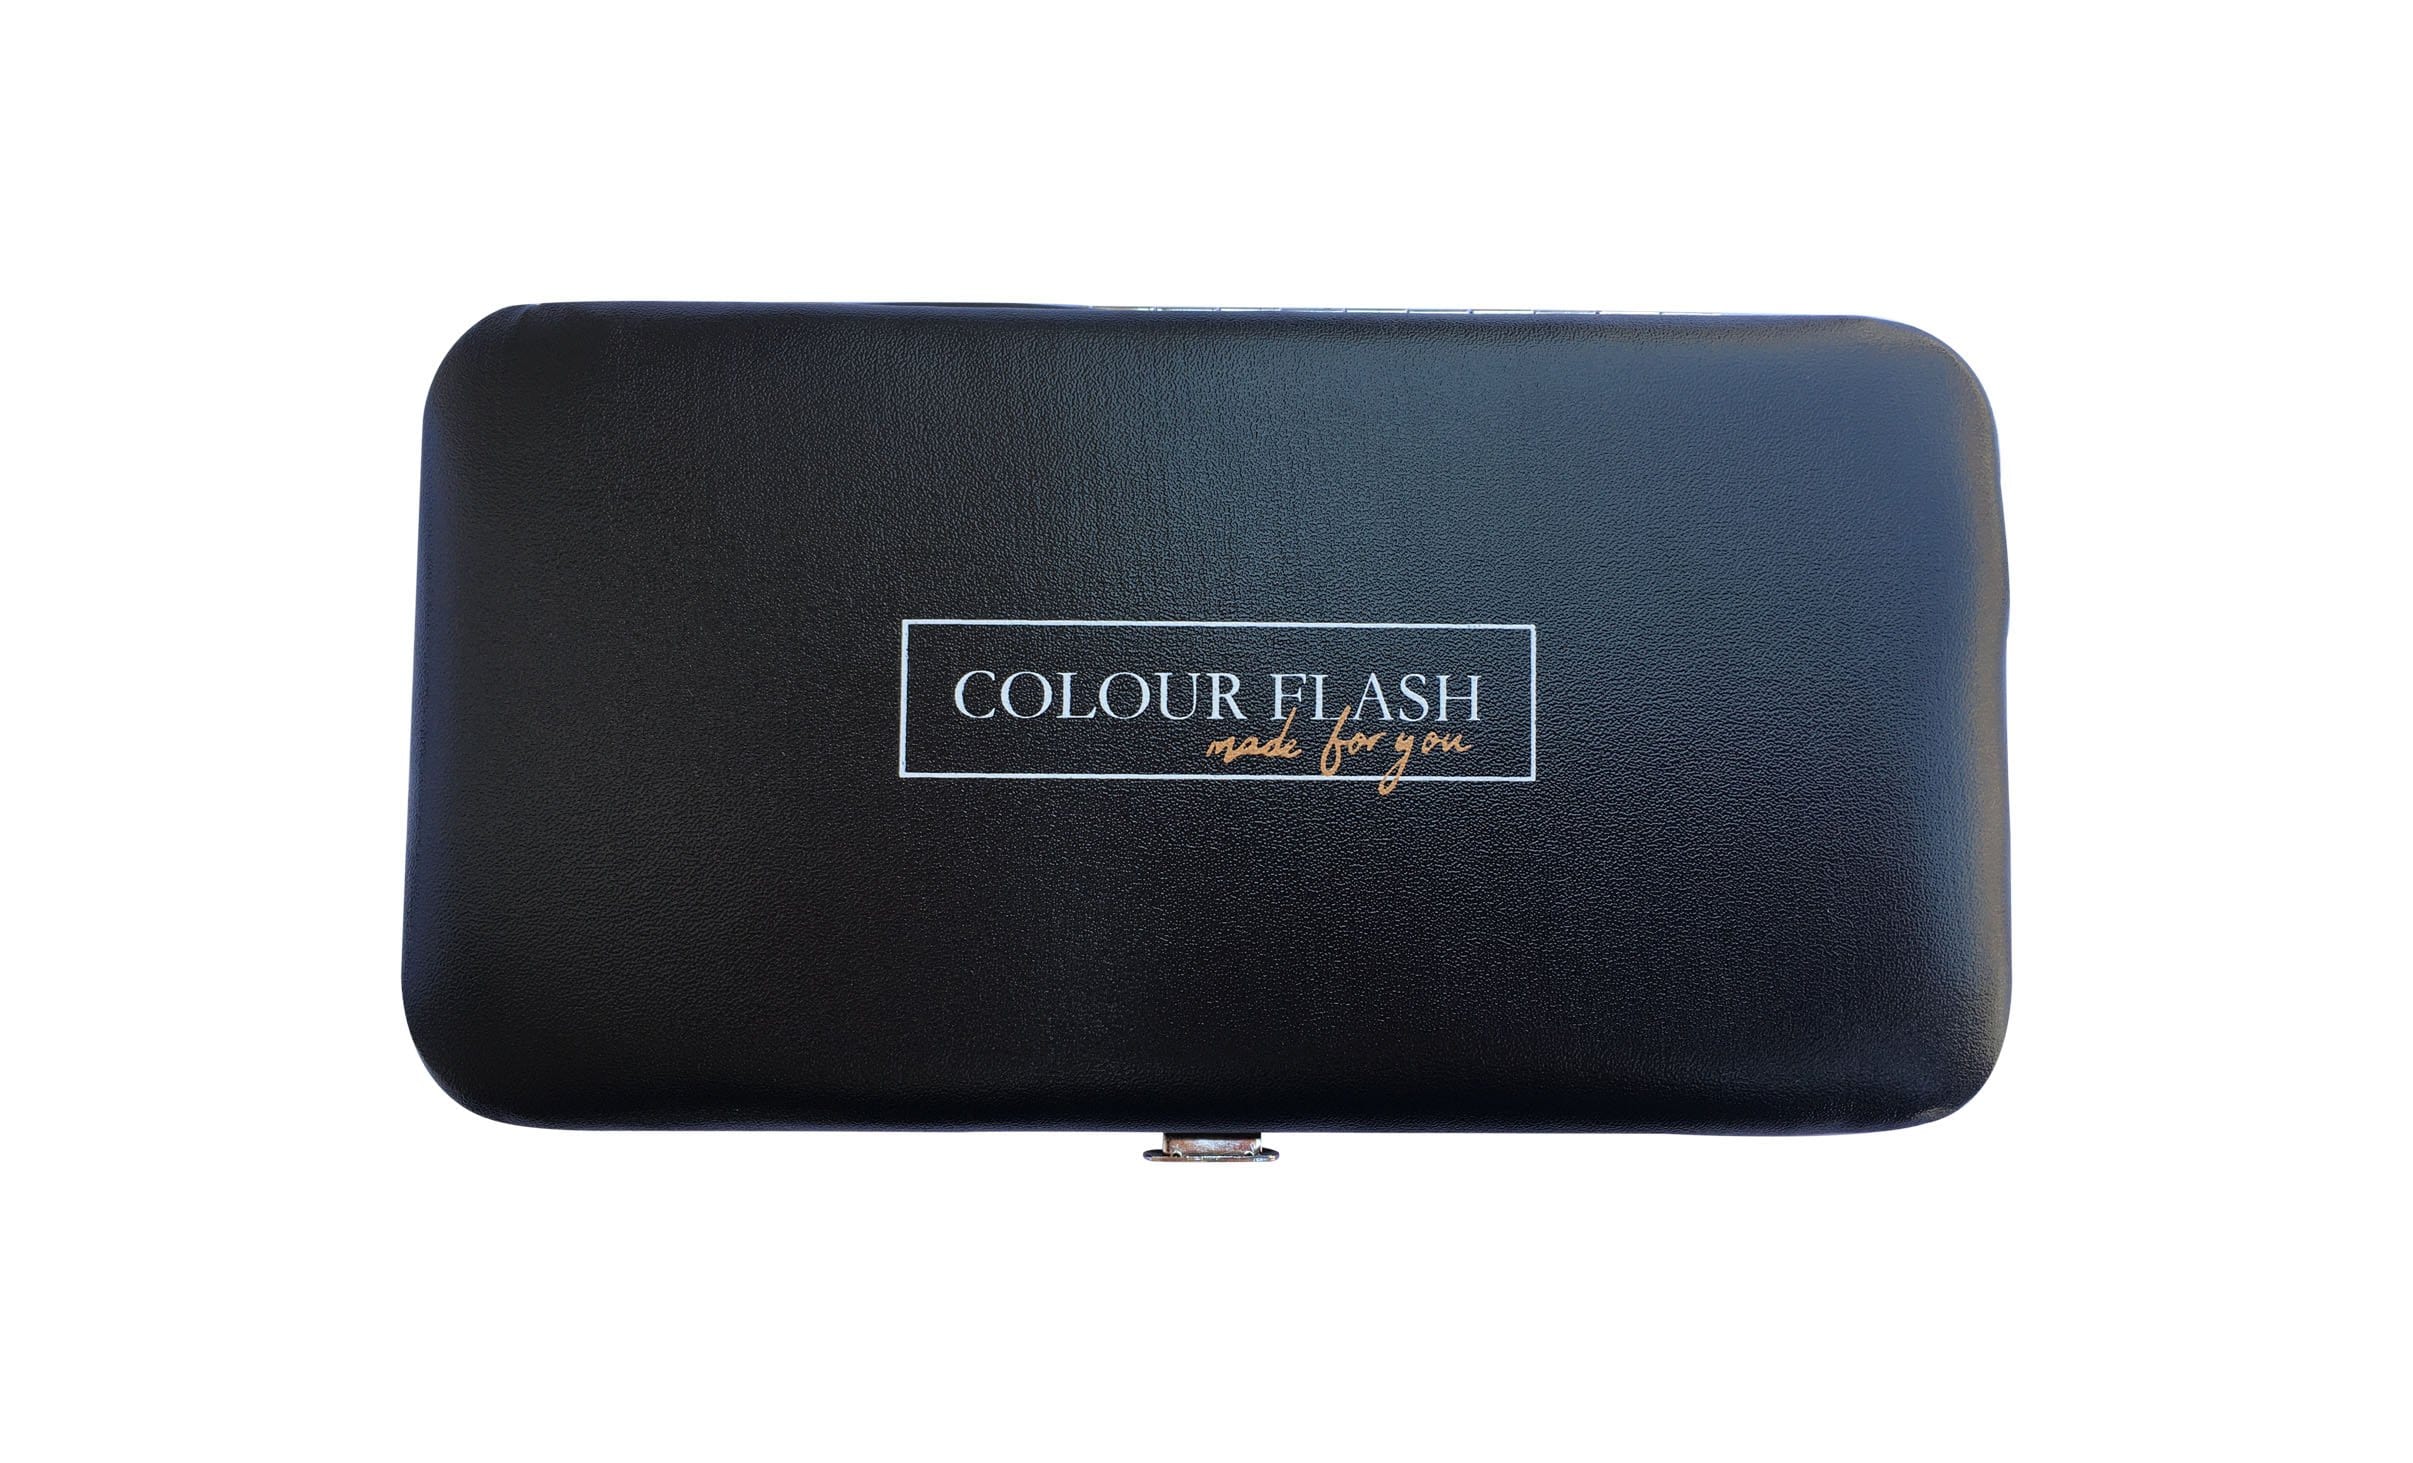 The Colour Flash Deluxe Manicure Set